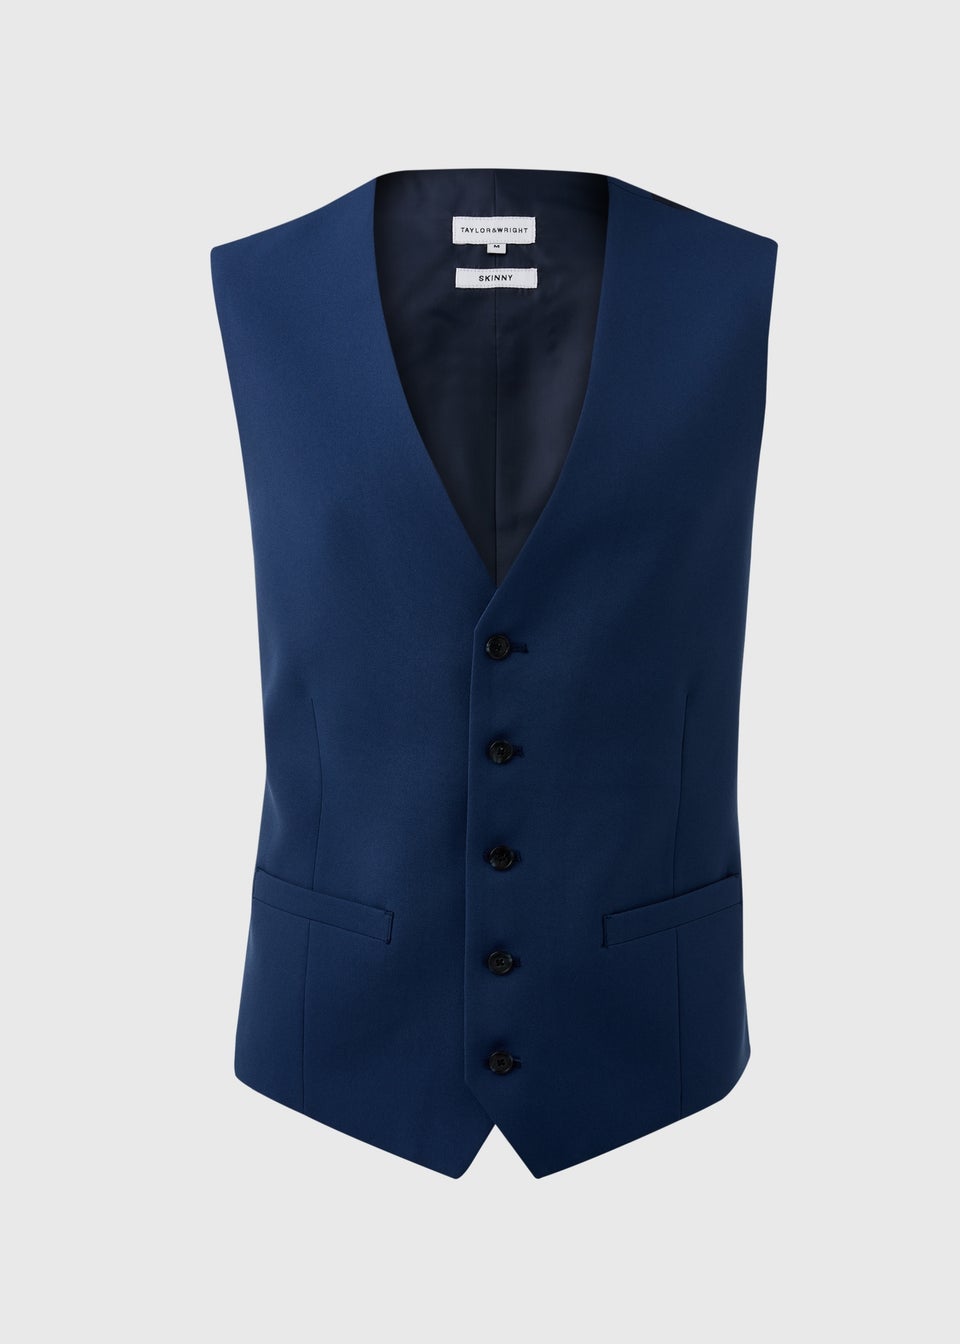 Taylor & Wright Panama Blue Suit Waistcoat